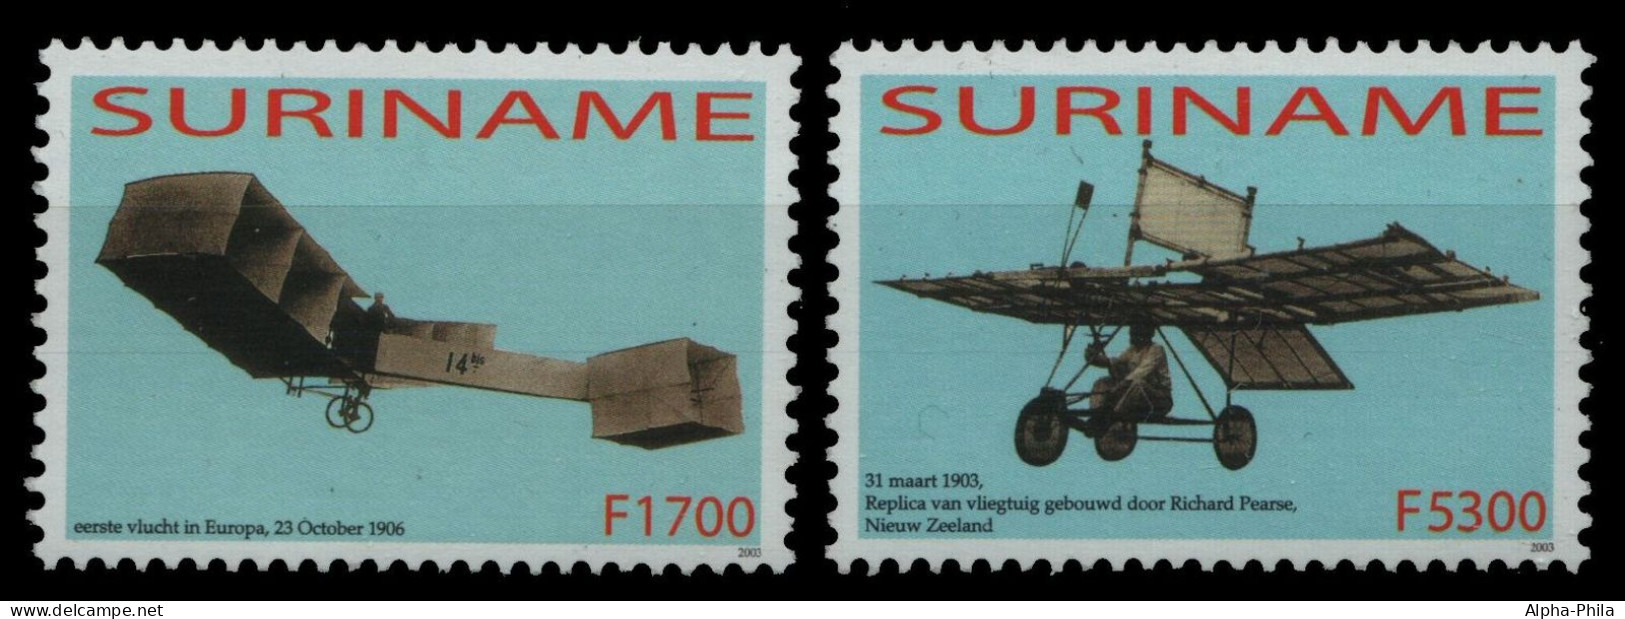 Surinam 2003 - Mi-Nr. 1894-1895 ** - MNH - Flugzeuge / Airplanes - Suriname